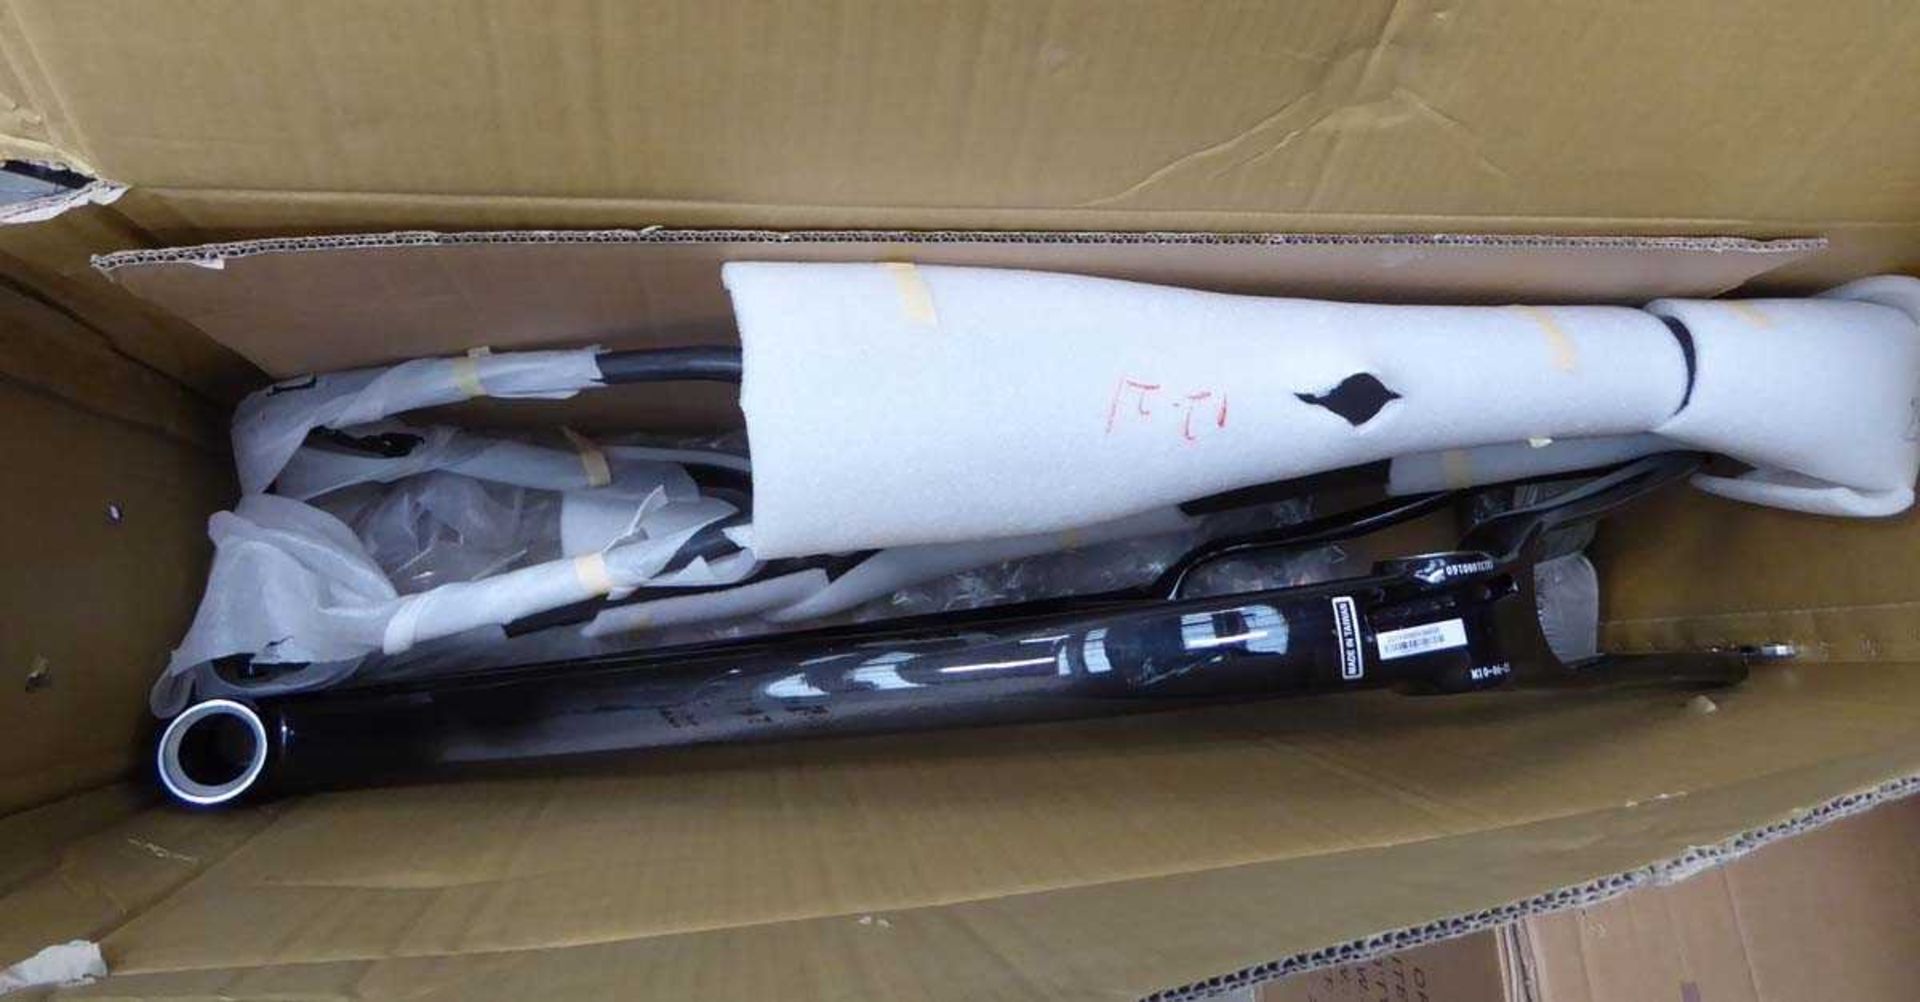 Box containing two carbon fiber bike frames